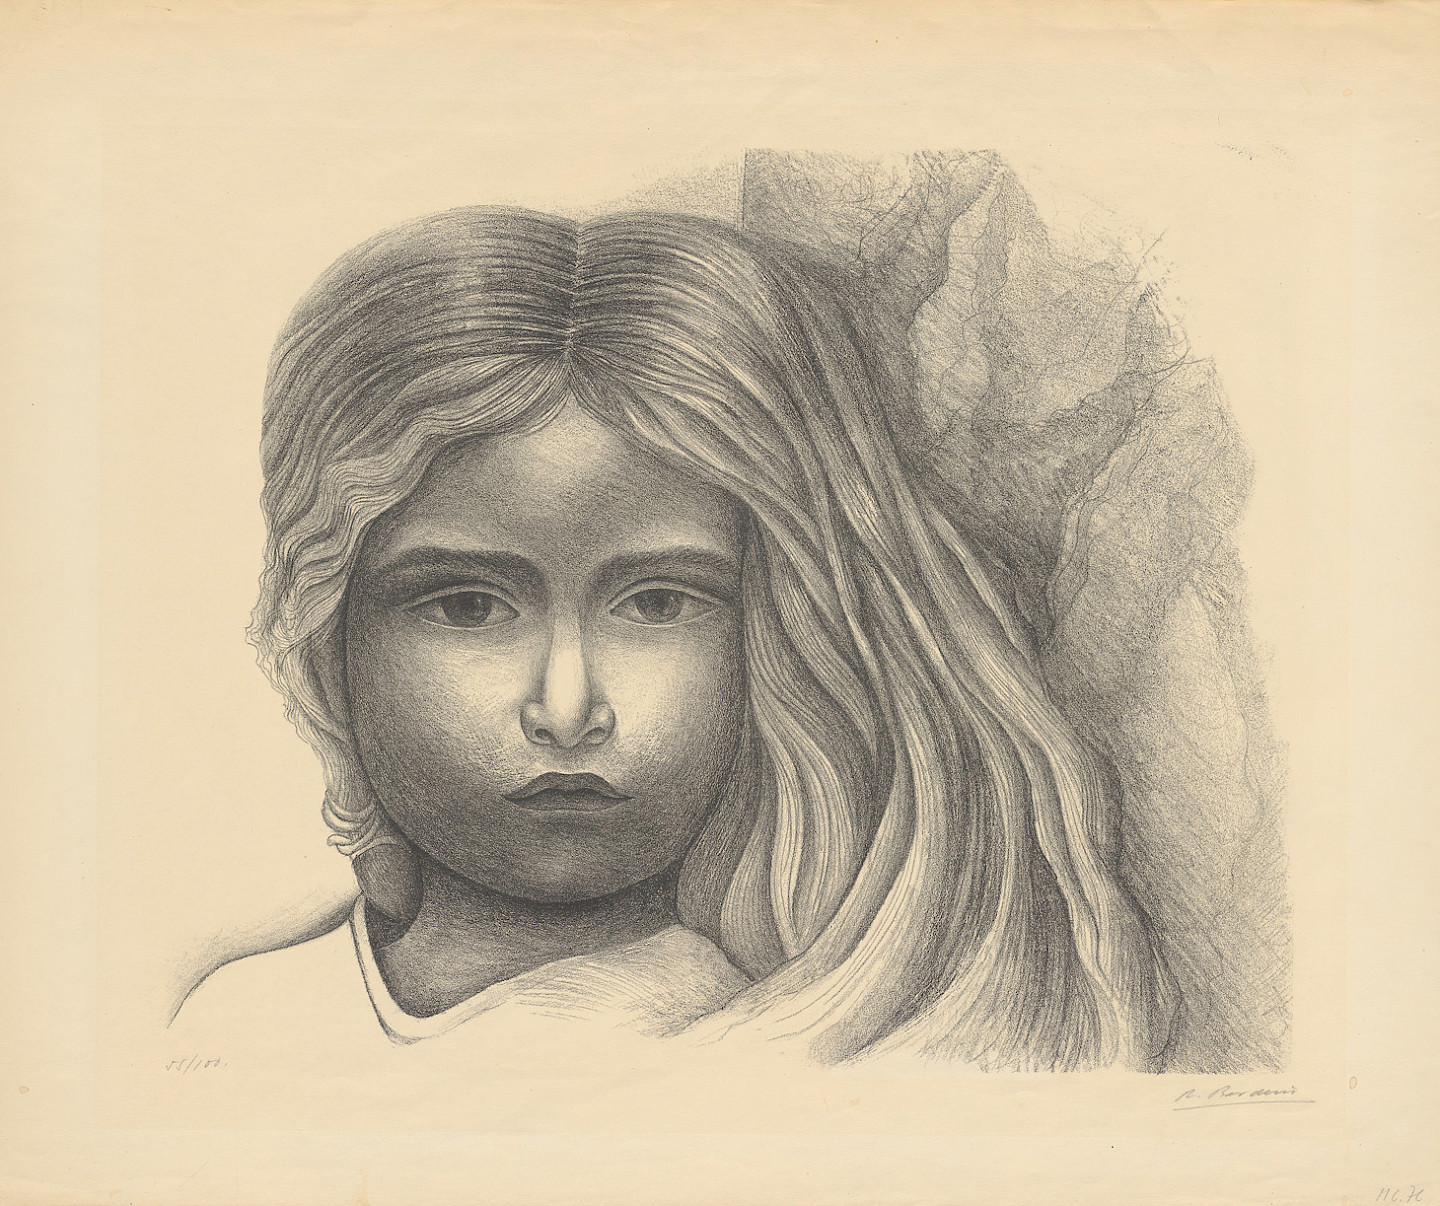 Roberto Berdecio, Retrato de una muchacha mexicana, 1947, Lithografie, Blatt: 55.7 x 66.7 cm, Kunsthaus Zürich, © Nachlass Roberto Berdecio